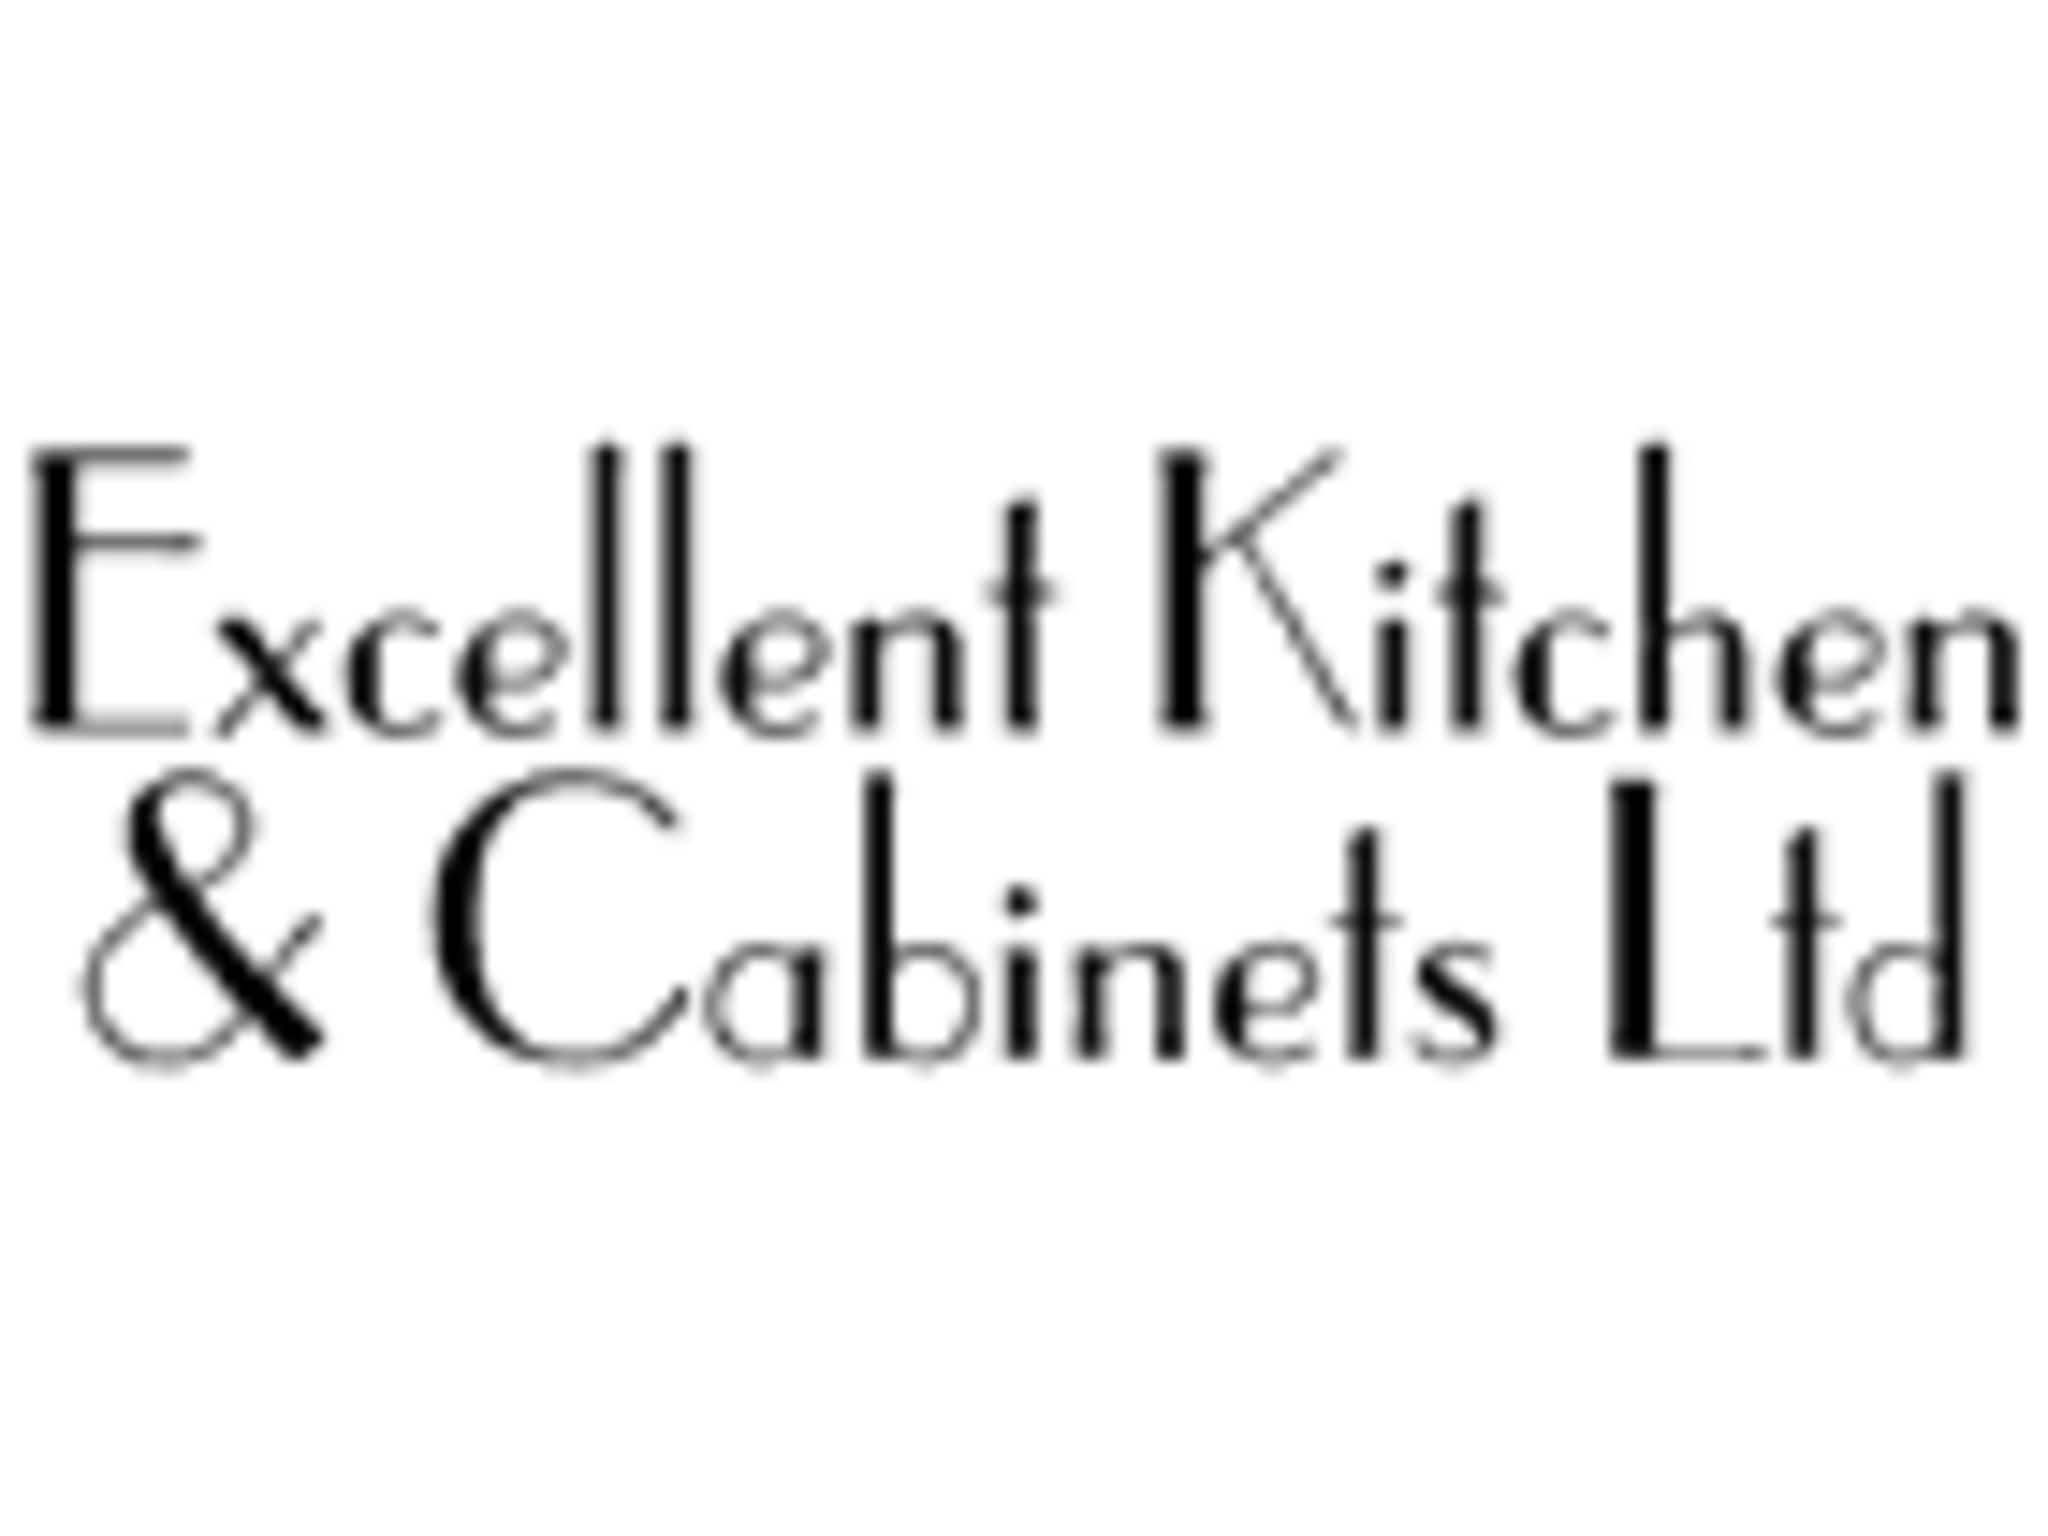 photo Excellent Kitchen & Cabinets Ltd